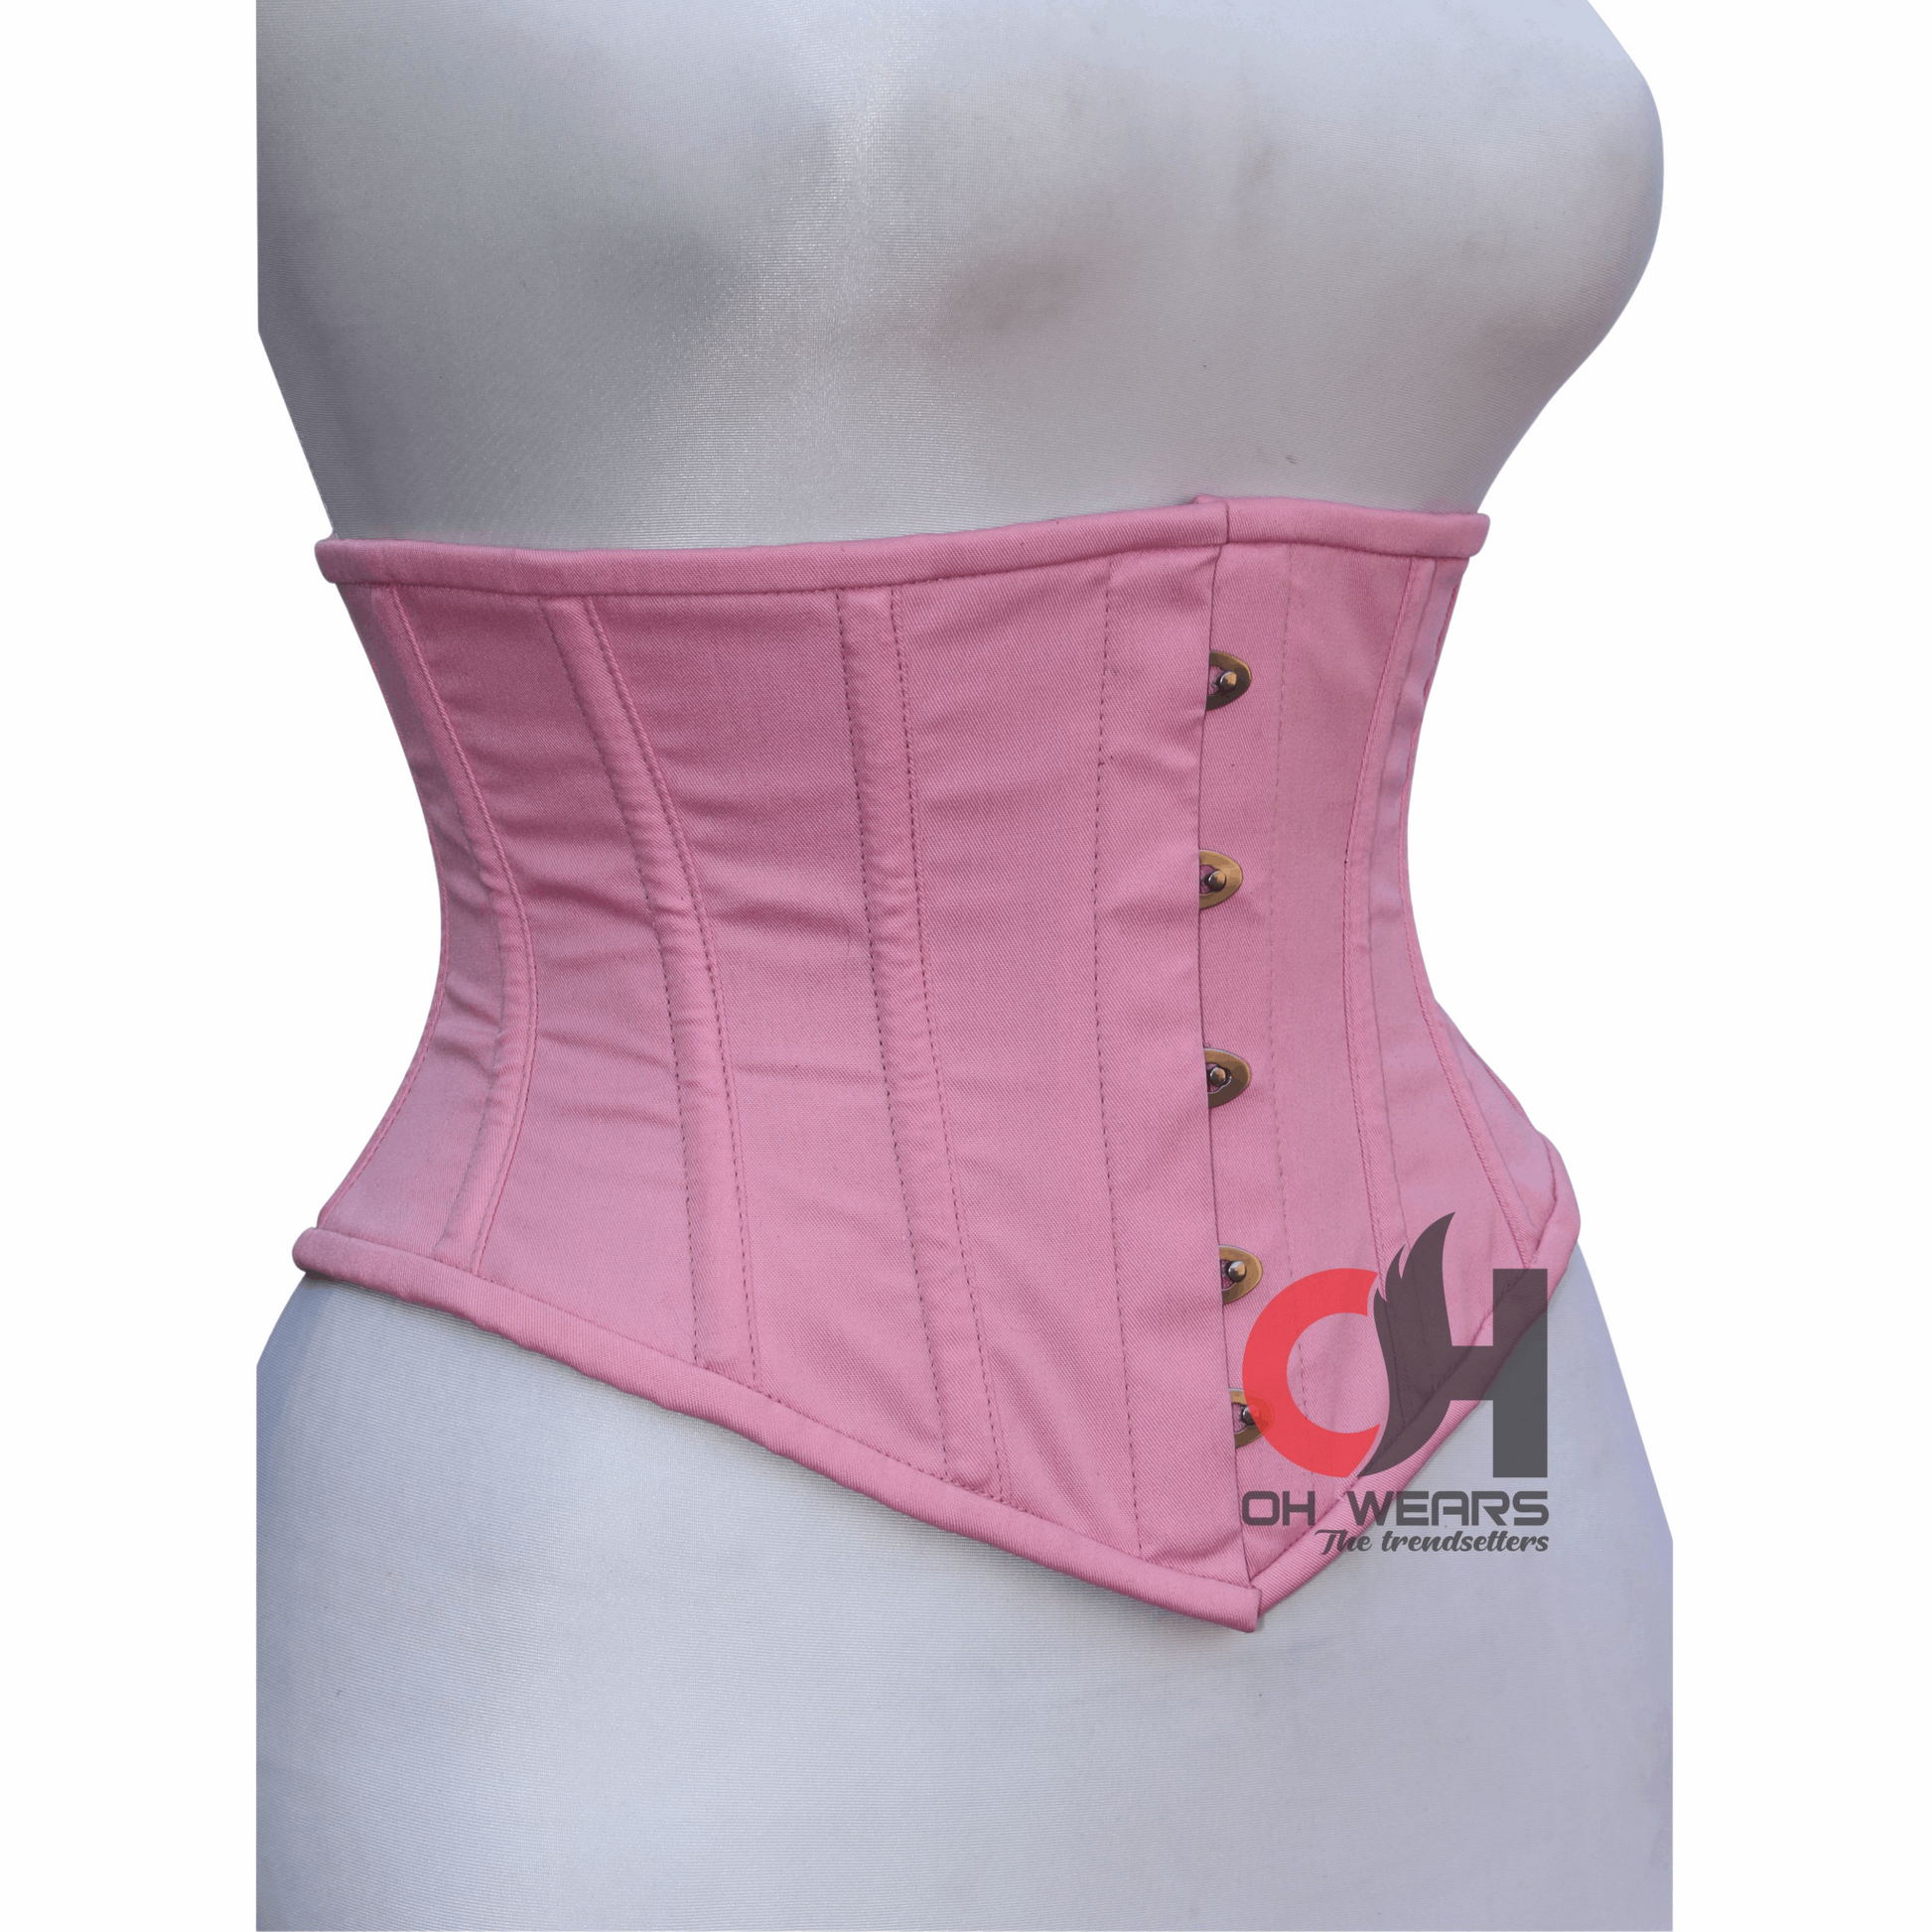 Real steel boned underbust underwear pink corset from transparent